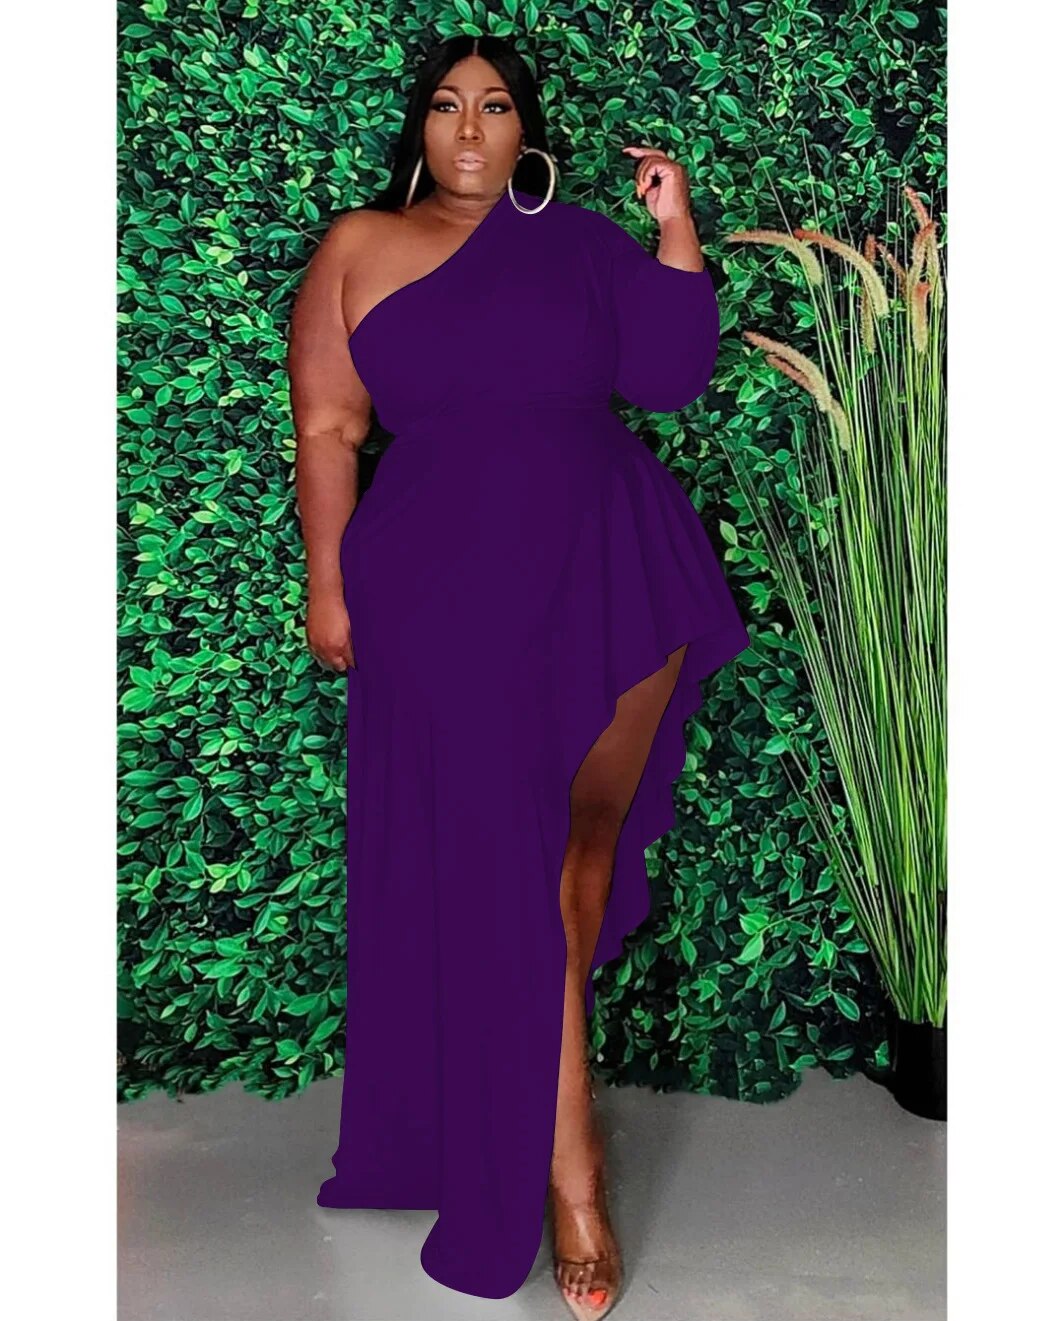 Plus Size One Shoulder Ruffle Dress Purple XL 